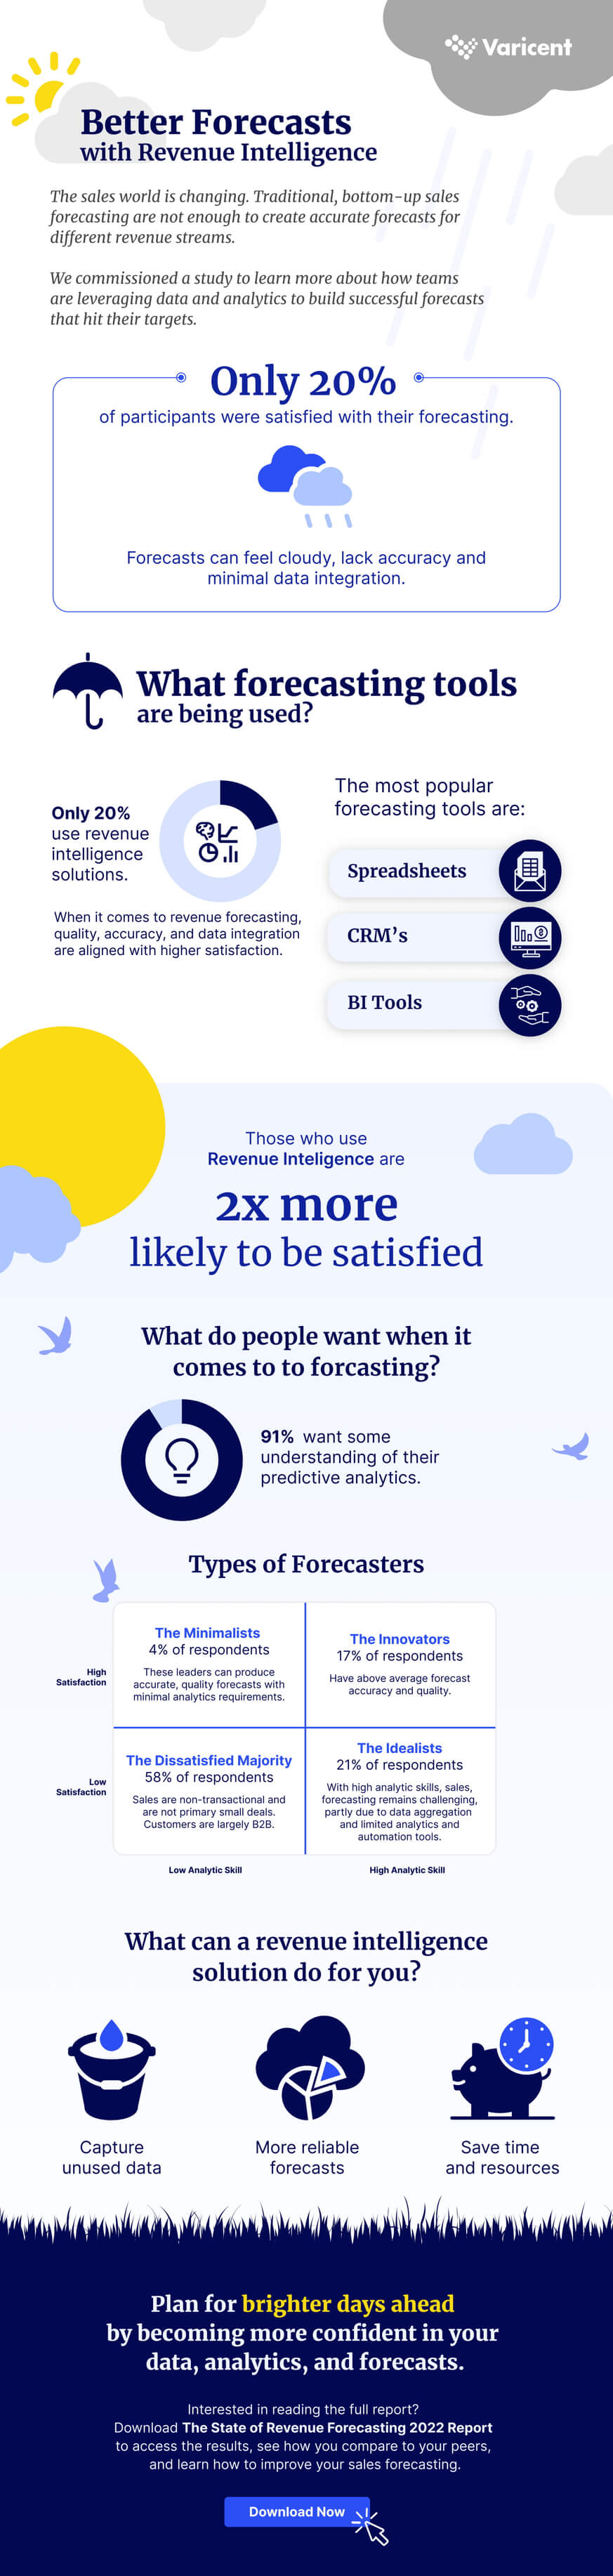 sales-forecasting-tools